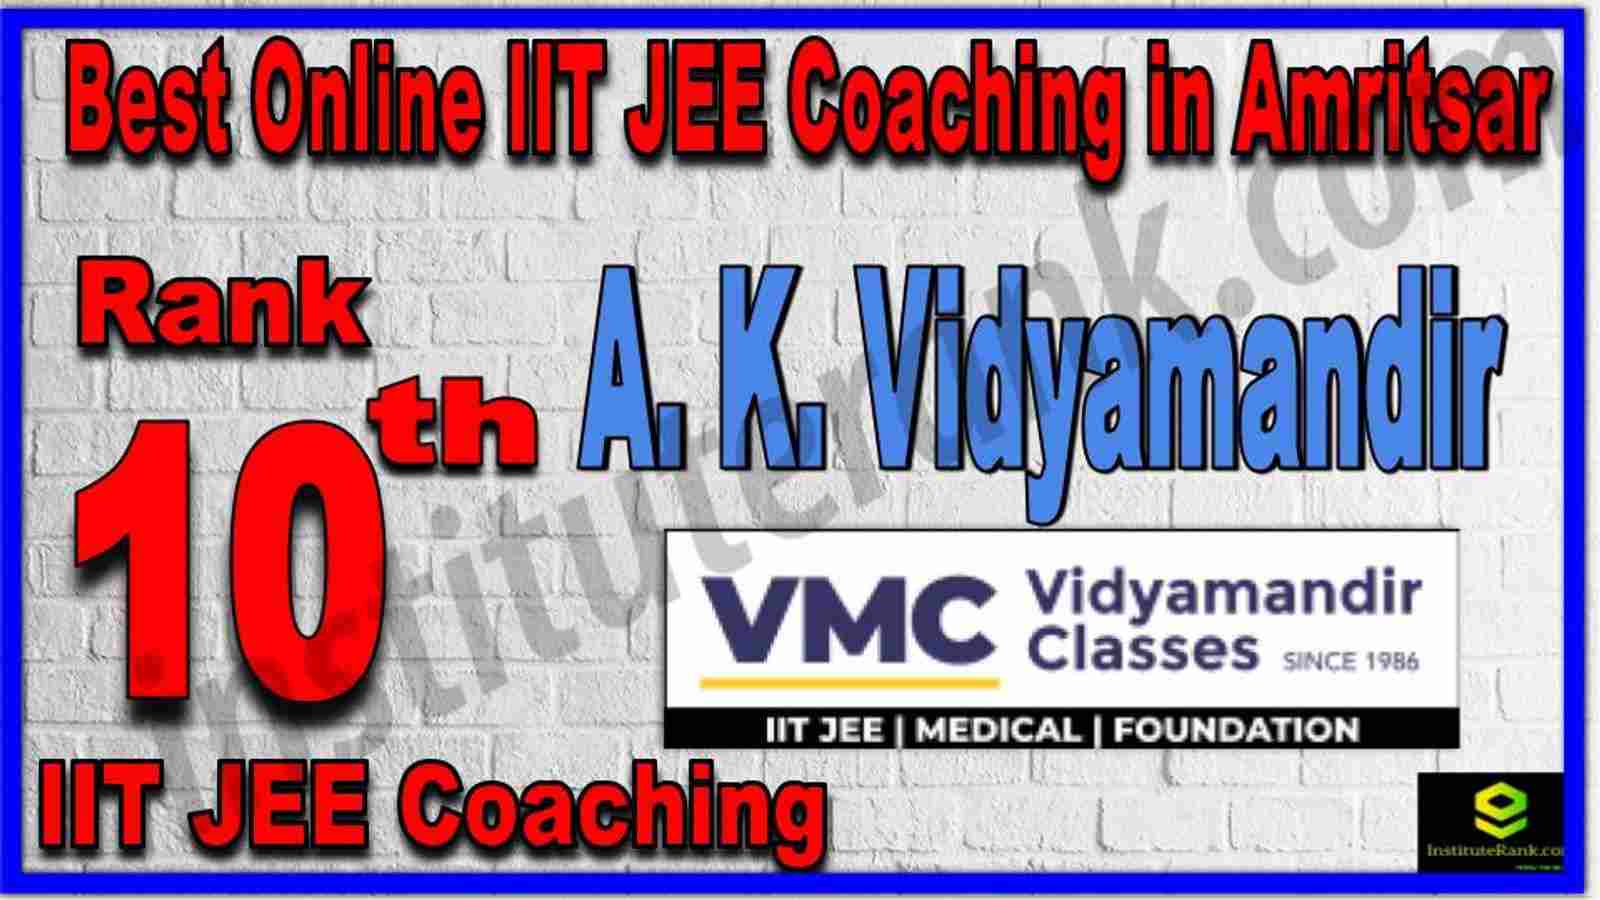 Rank 10th Best Online IIT JEE Coaching in Amritsar